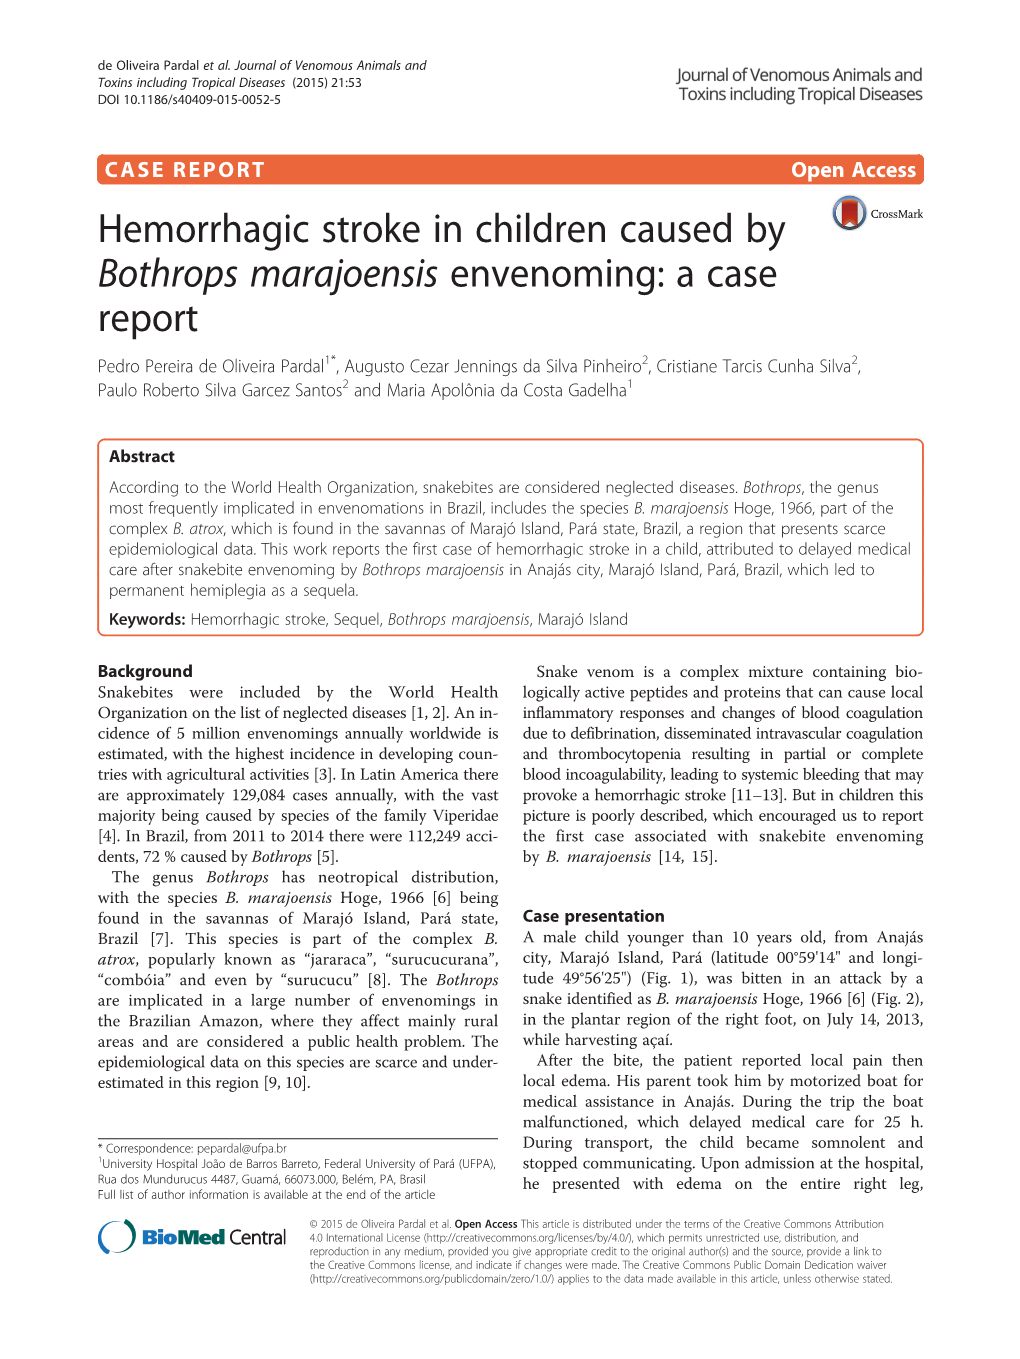 Hemorrhagic Stroke in Children Caused by Bothrops Marajoensis